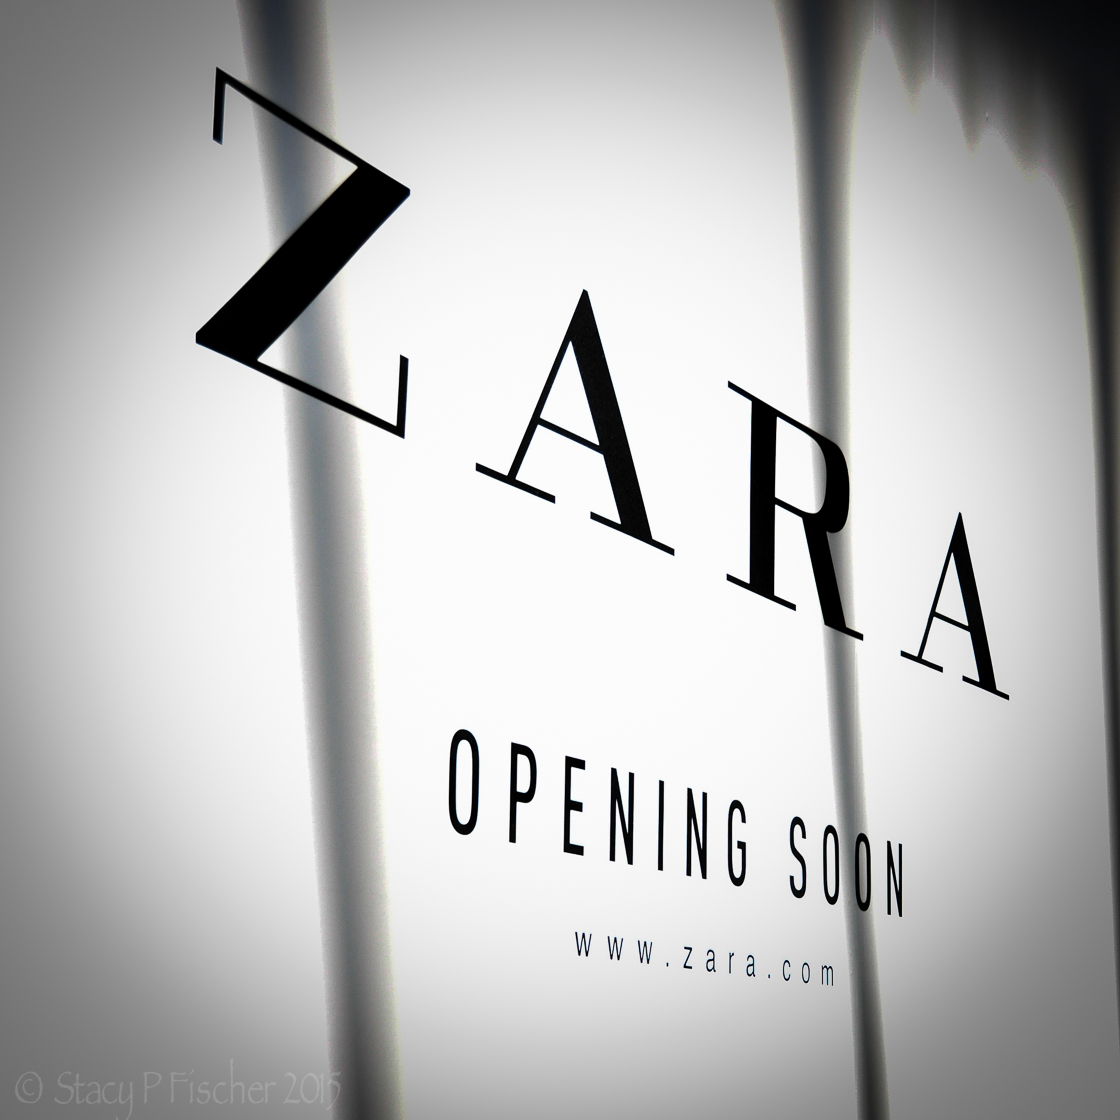 Zara storefront sign